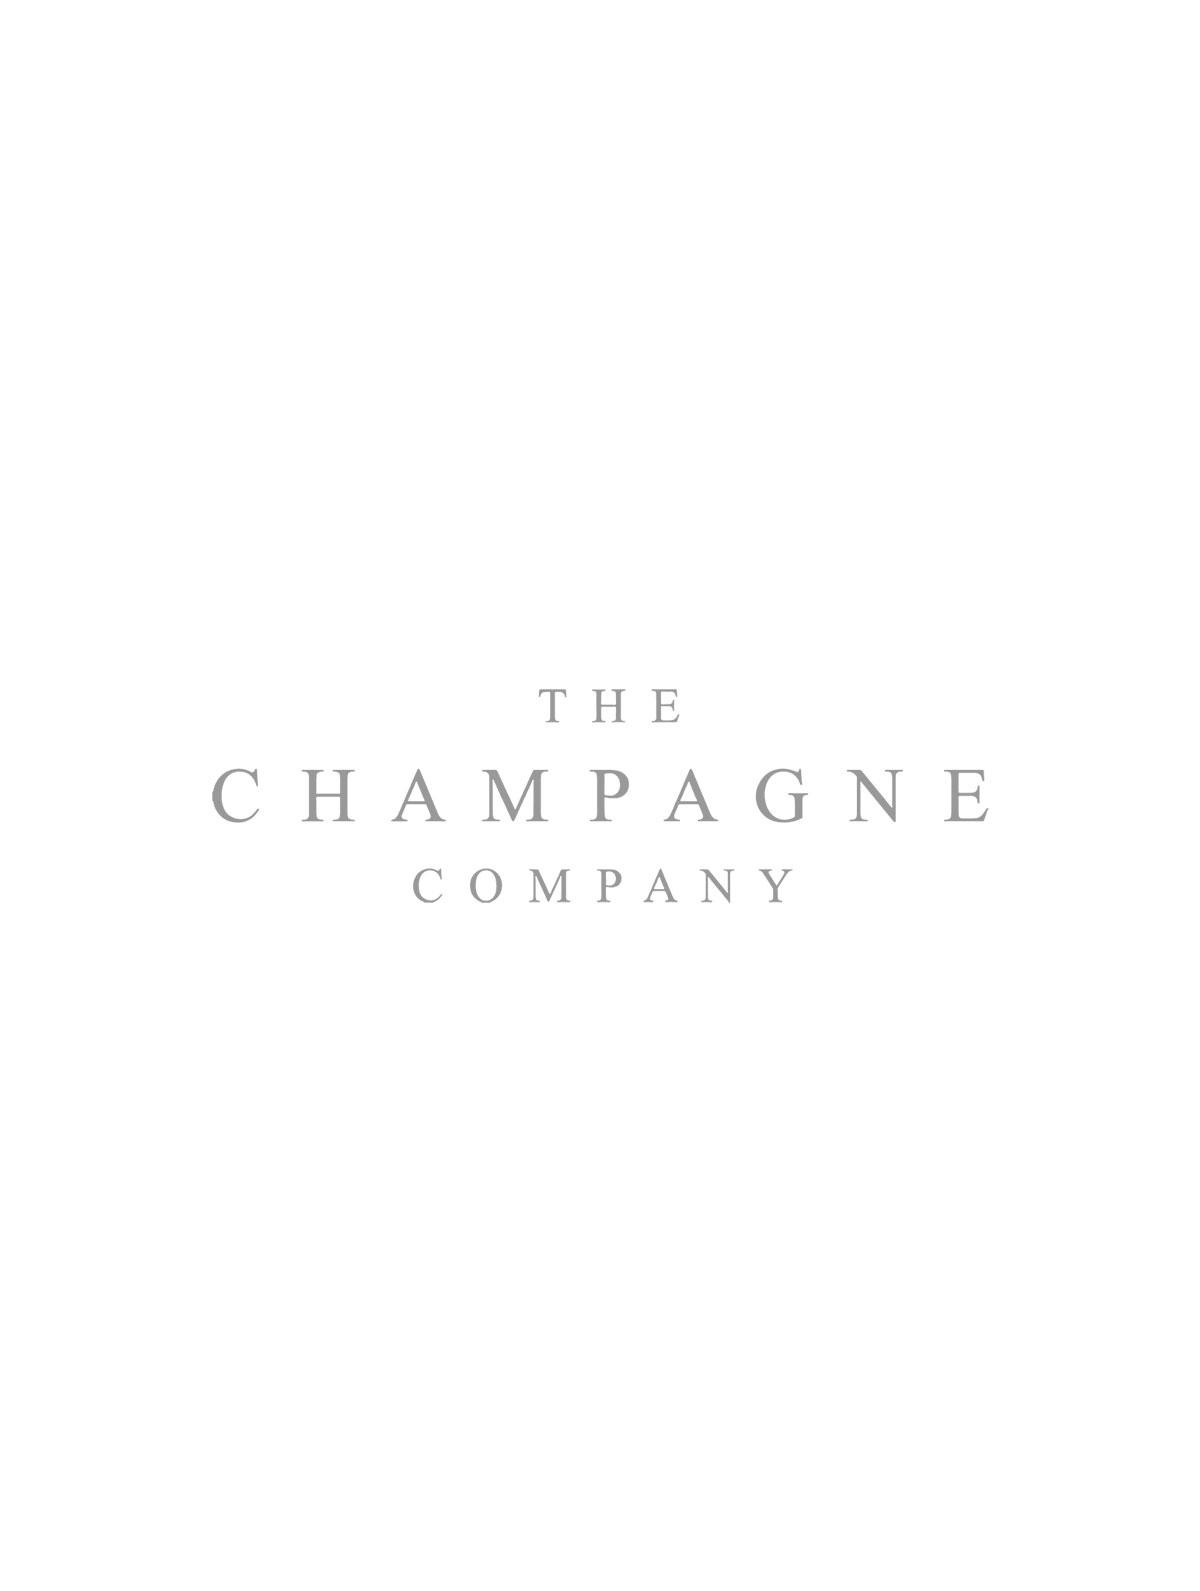 Laurent-Perrier Cuvée Rosé Champagne, Candle & Truffles Luxury Gift Box